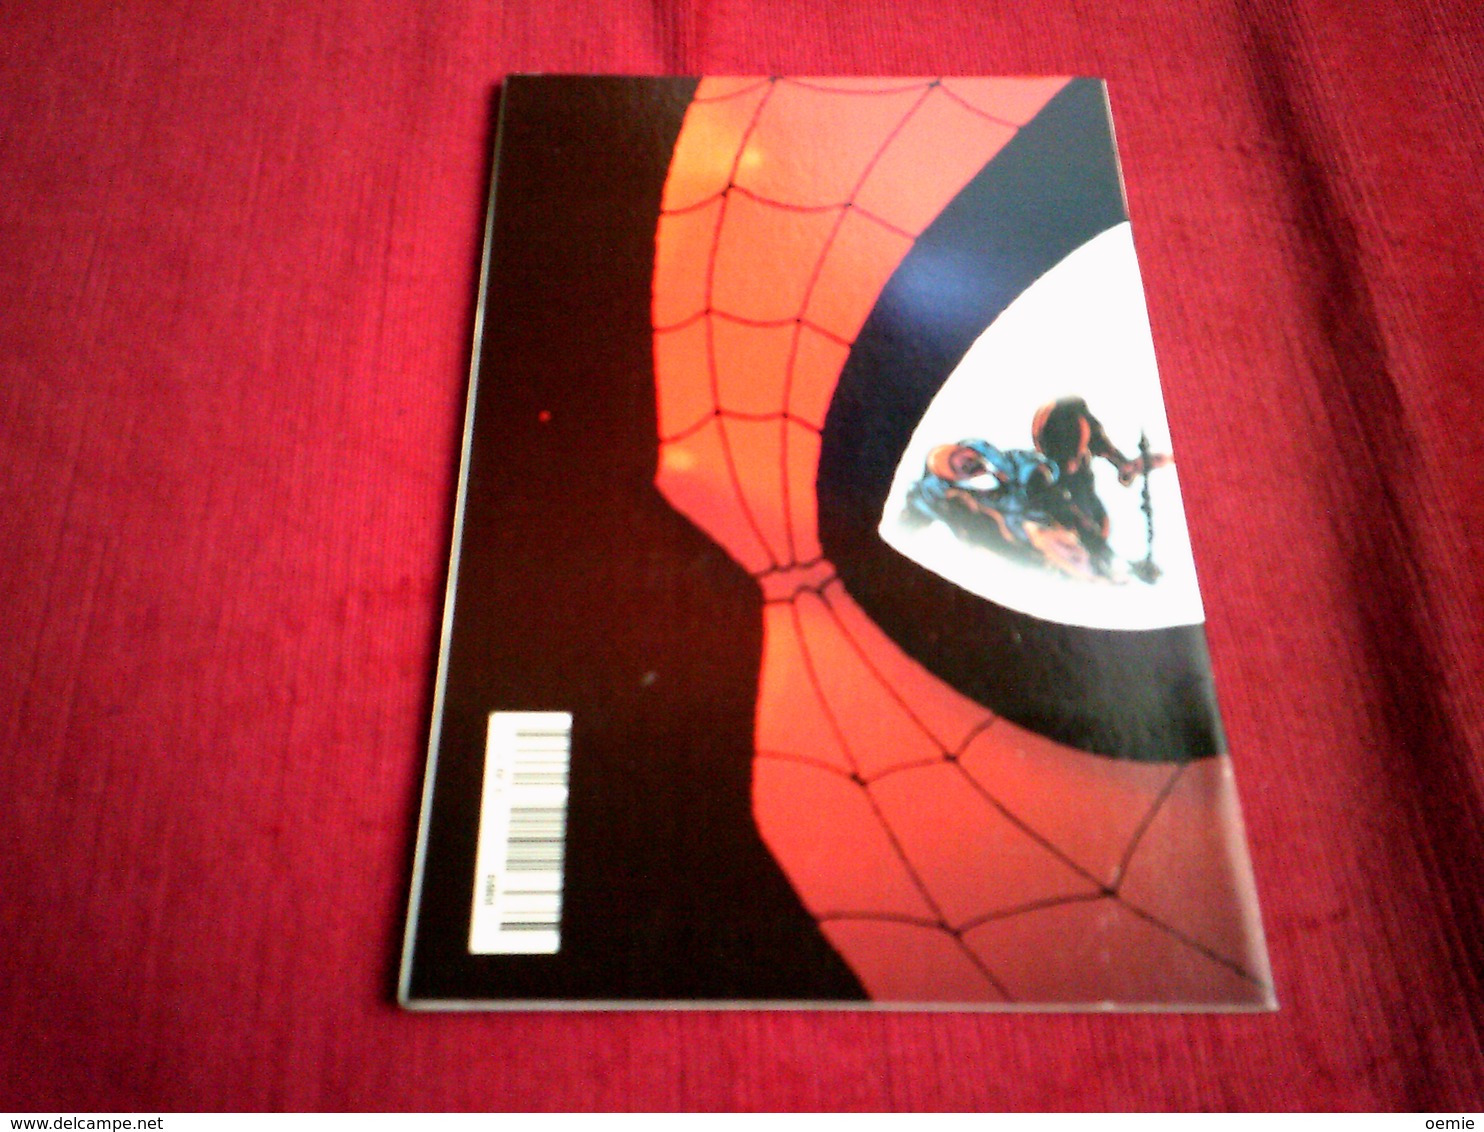 SPIDER MAN    N° 2  HORS SERIE   LE JOURNAL DU CLONE  JUIN 1996 - Spider-Man